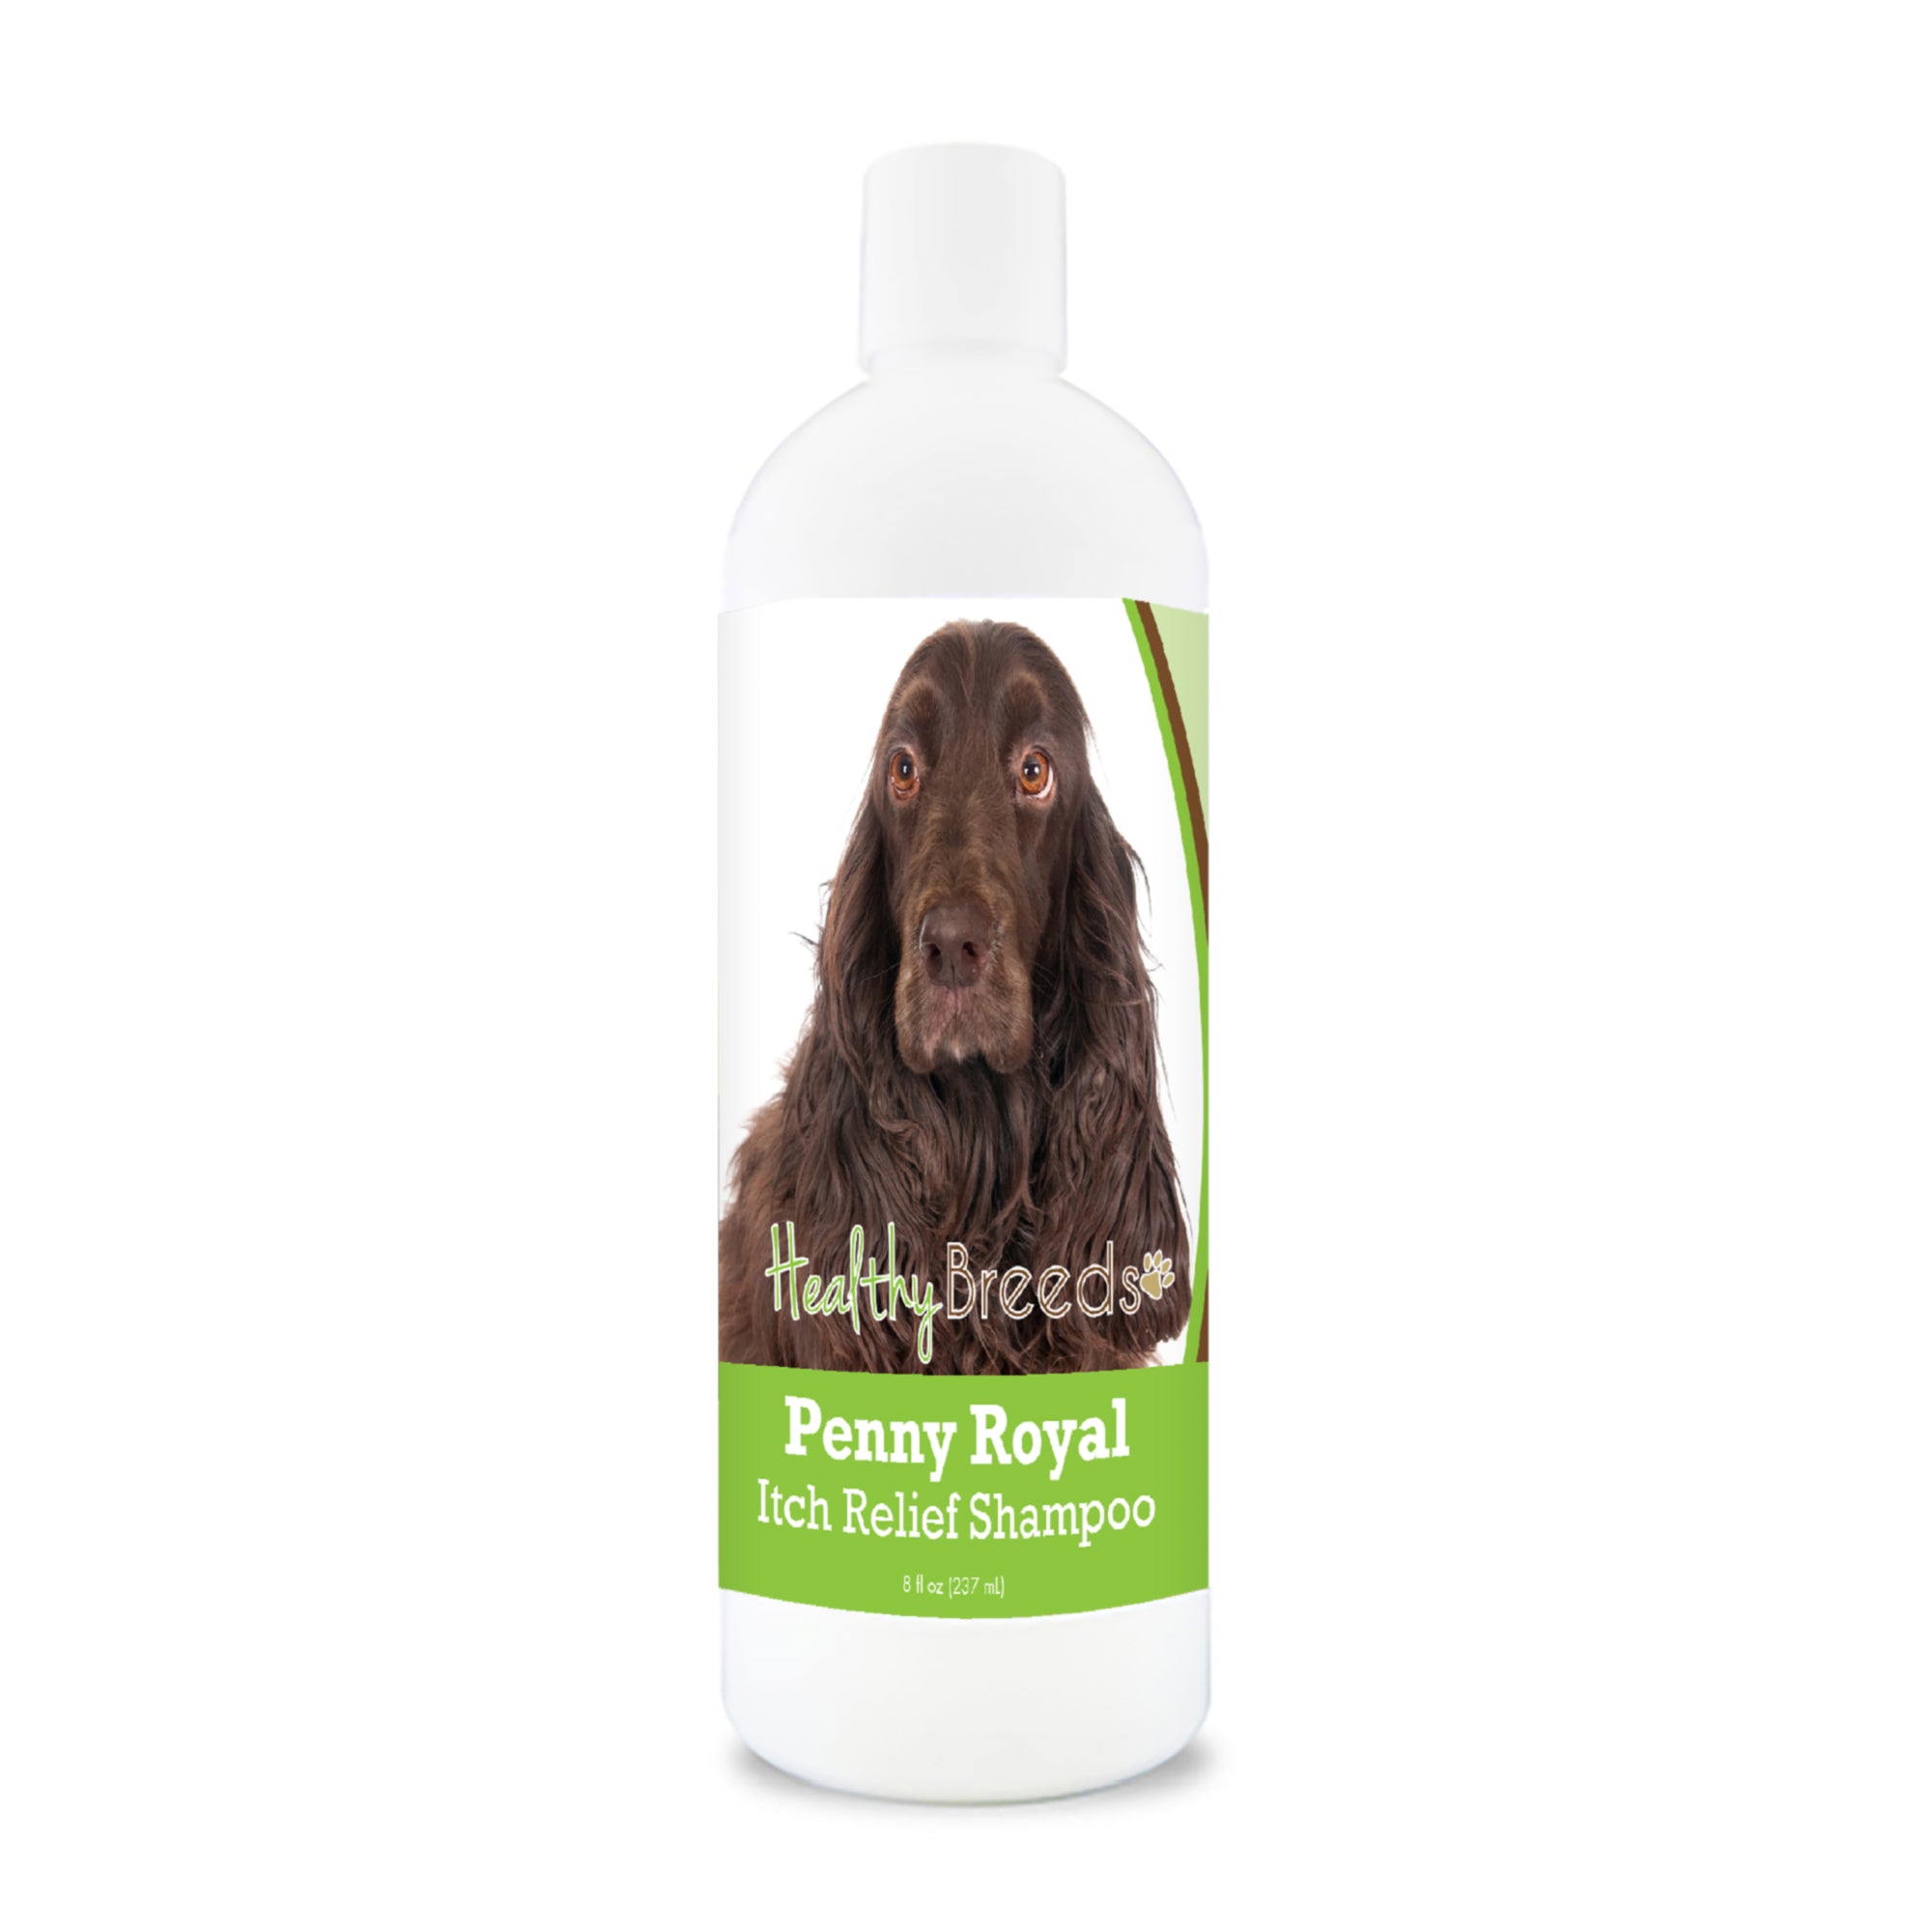 Field Spaniel Penny Royal Itch Relief Shampoo 8 oz